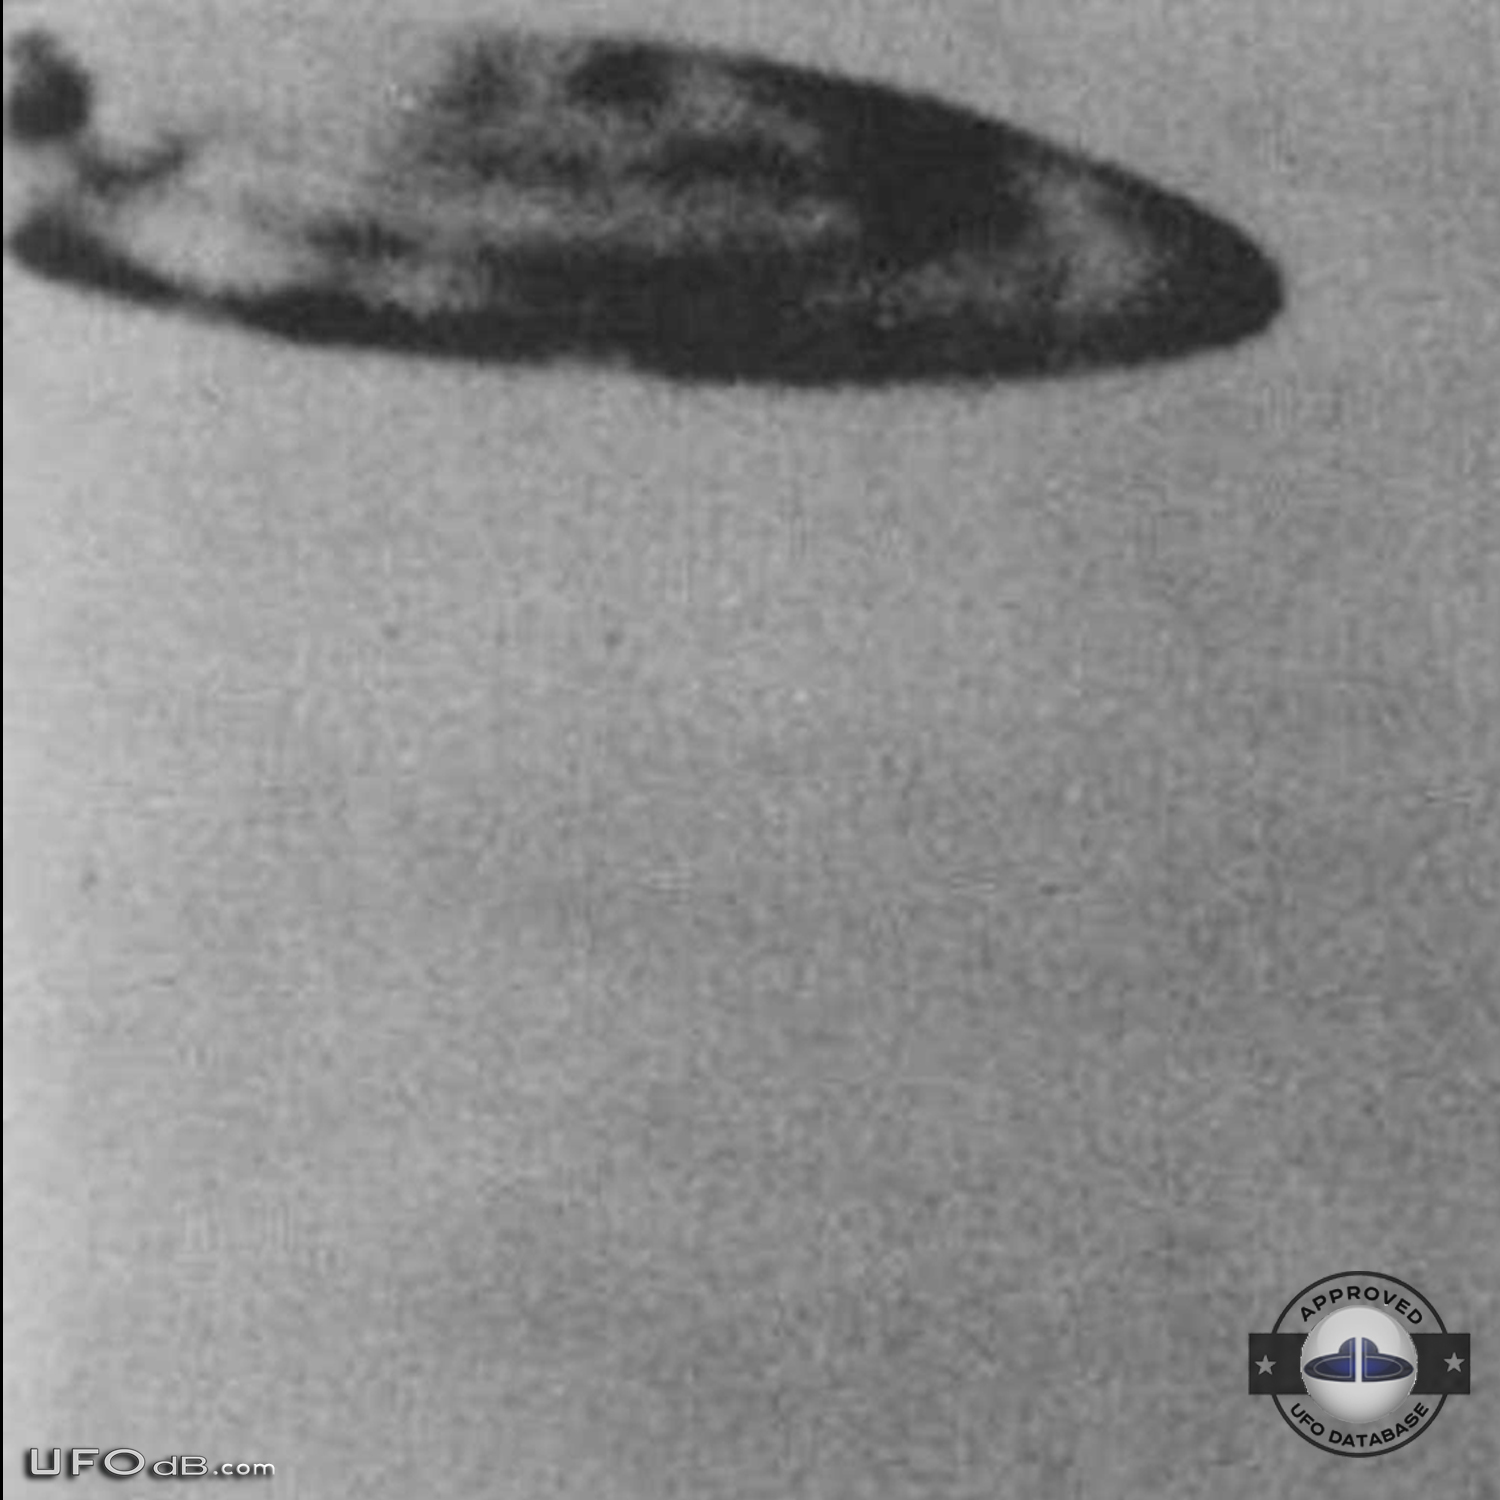 1950 Saucer UFO San Bernardino California USA caught on picture UFO Picture #433-3